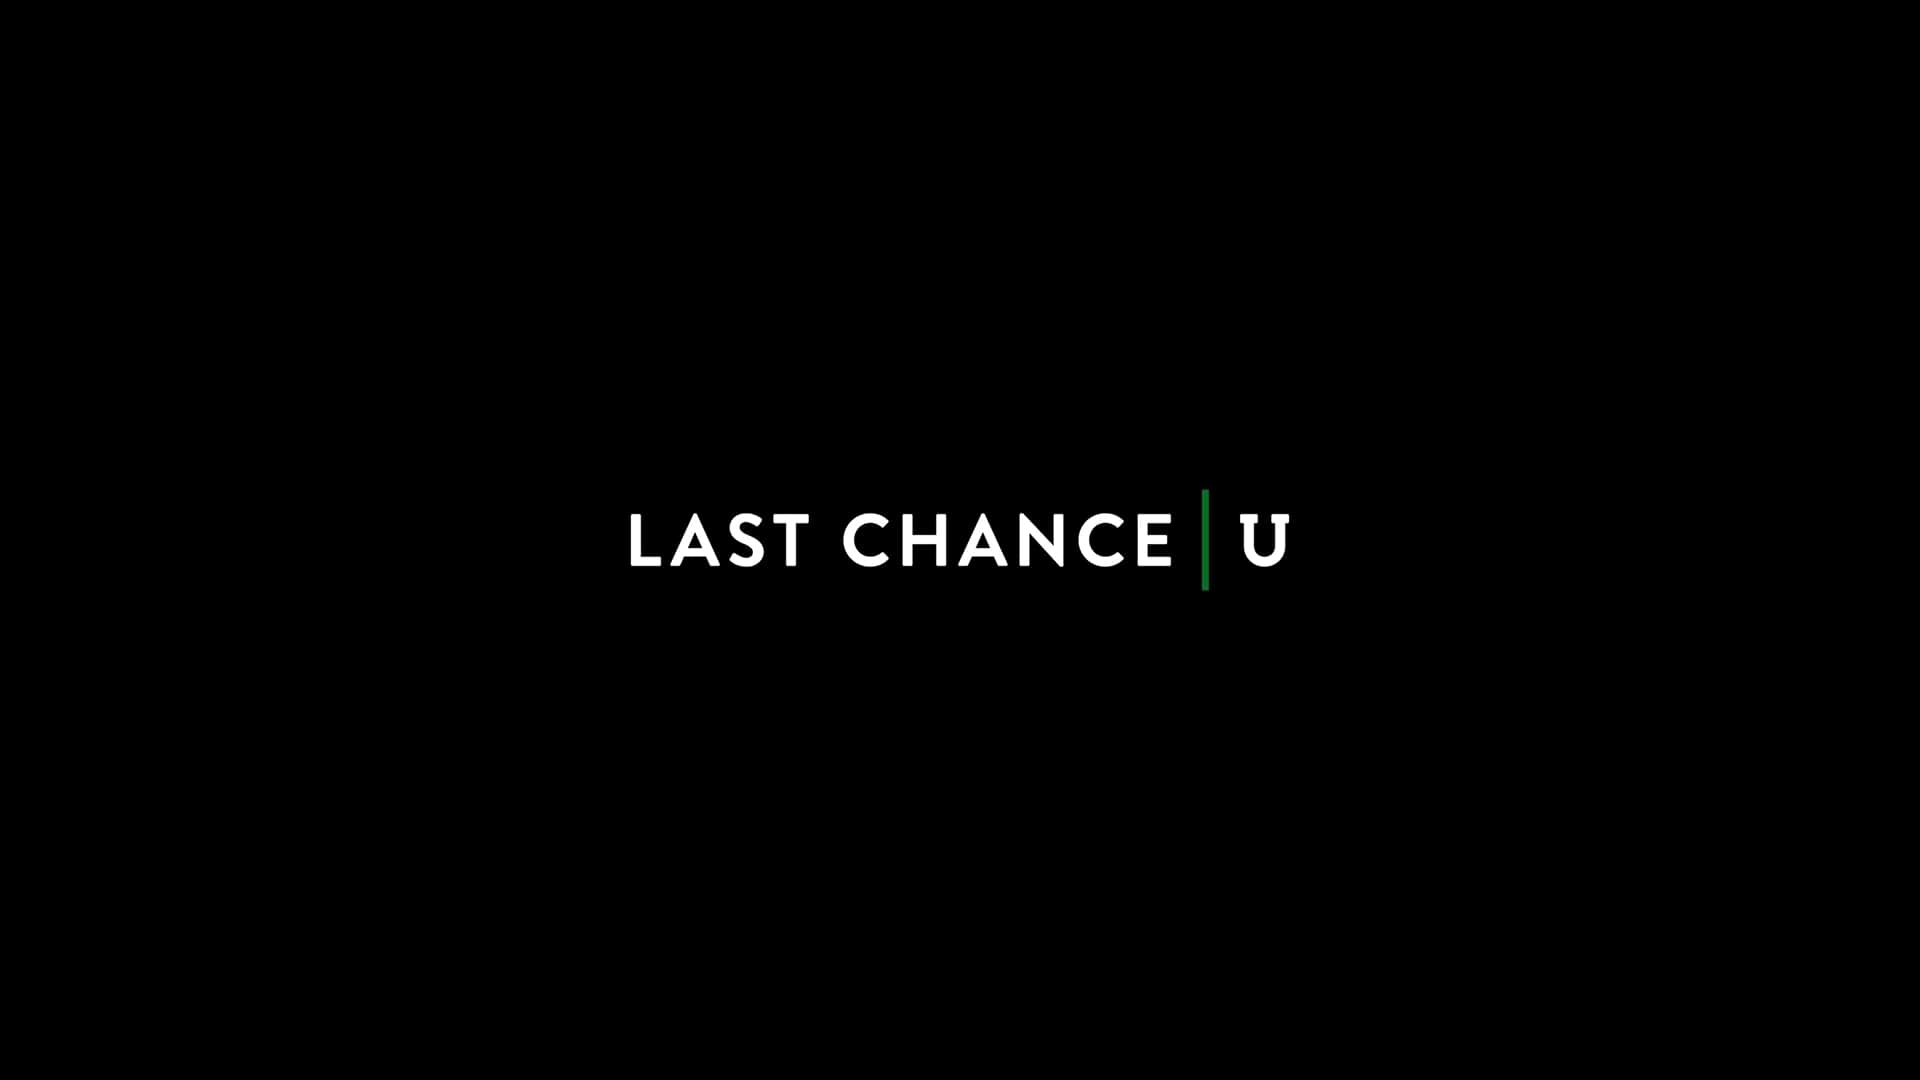 Netflix Last Chance U Season 5 Trailer, Netflix Documentary Series, Netflix Sports Documentary, Coming to Netflix in August 2020